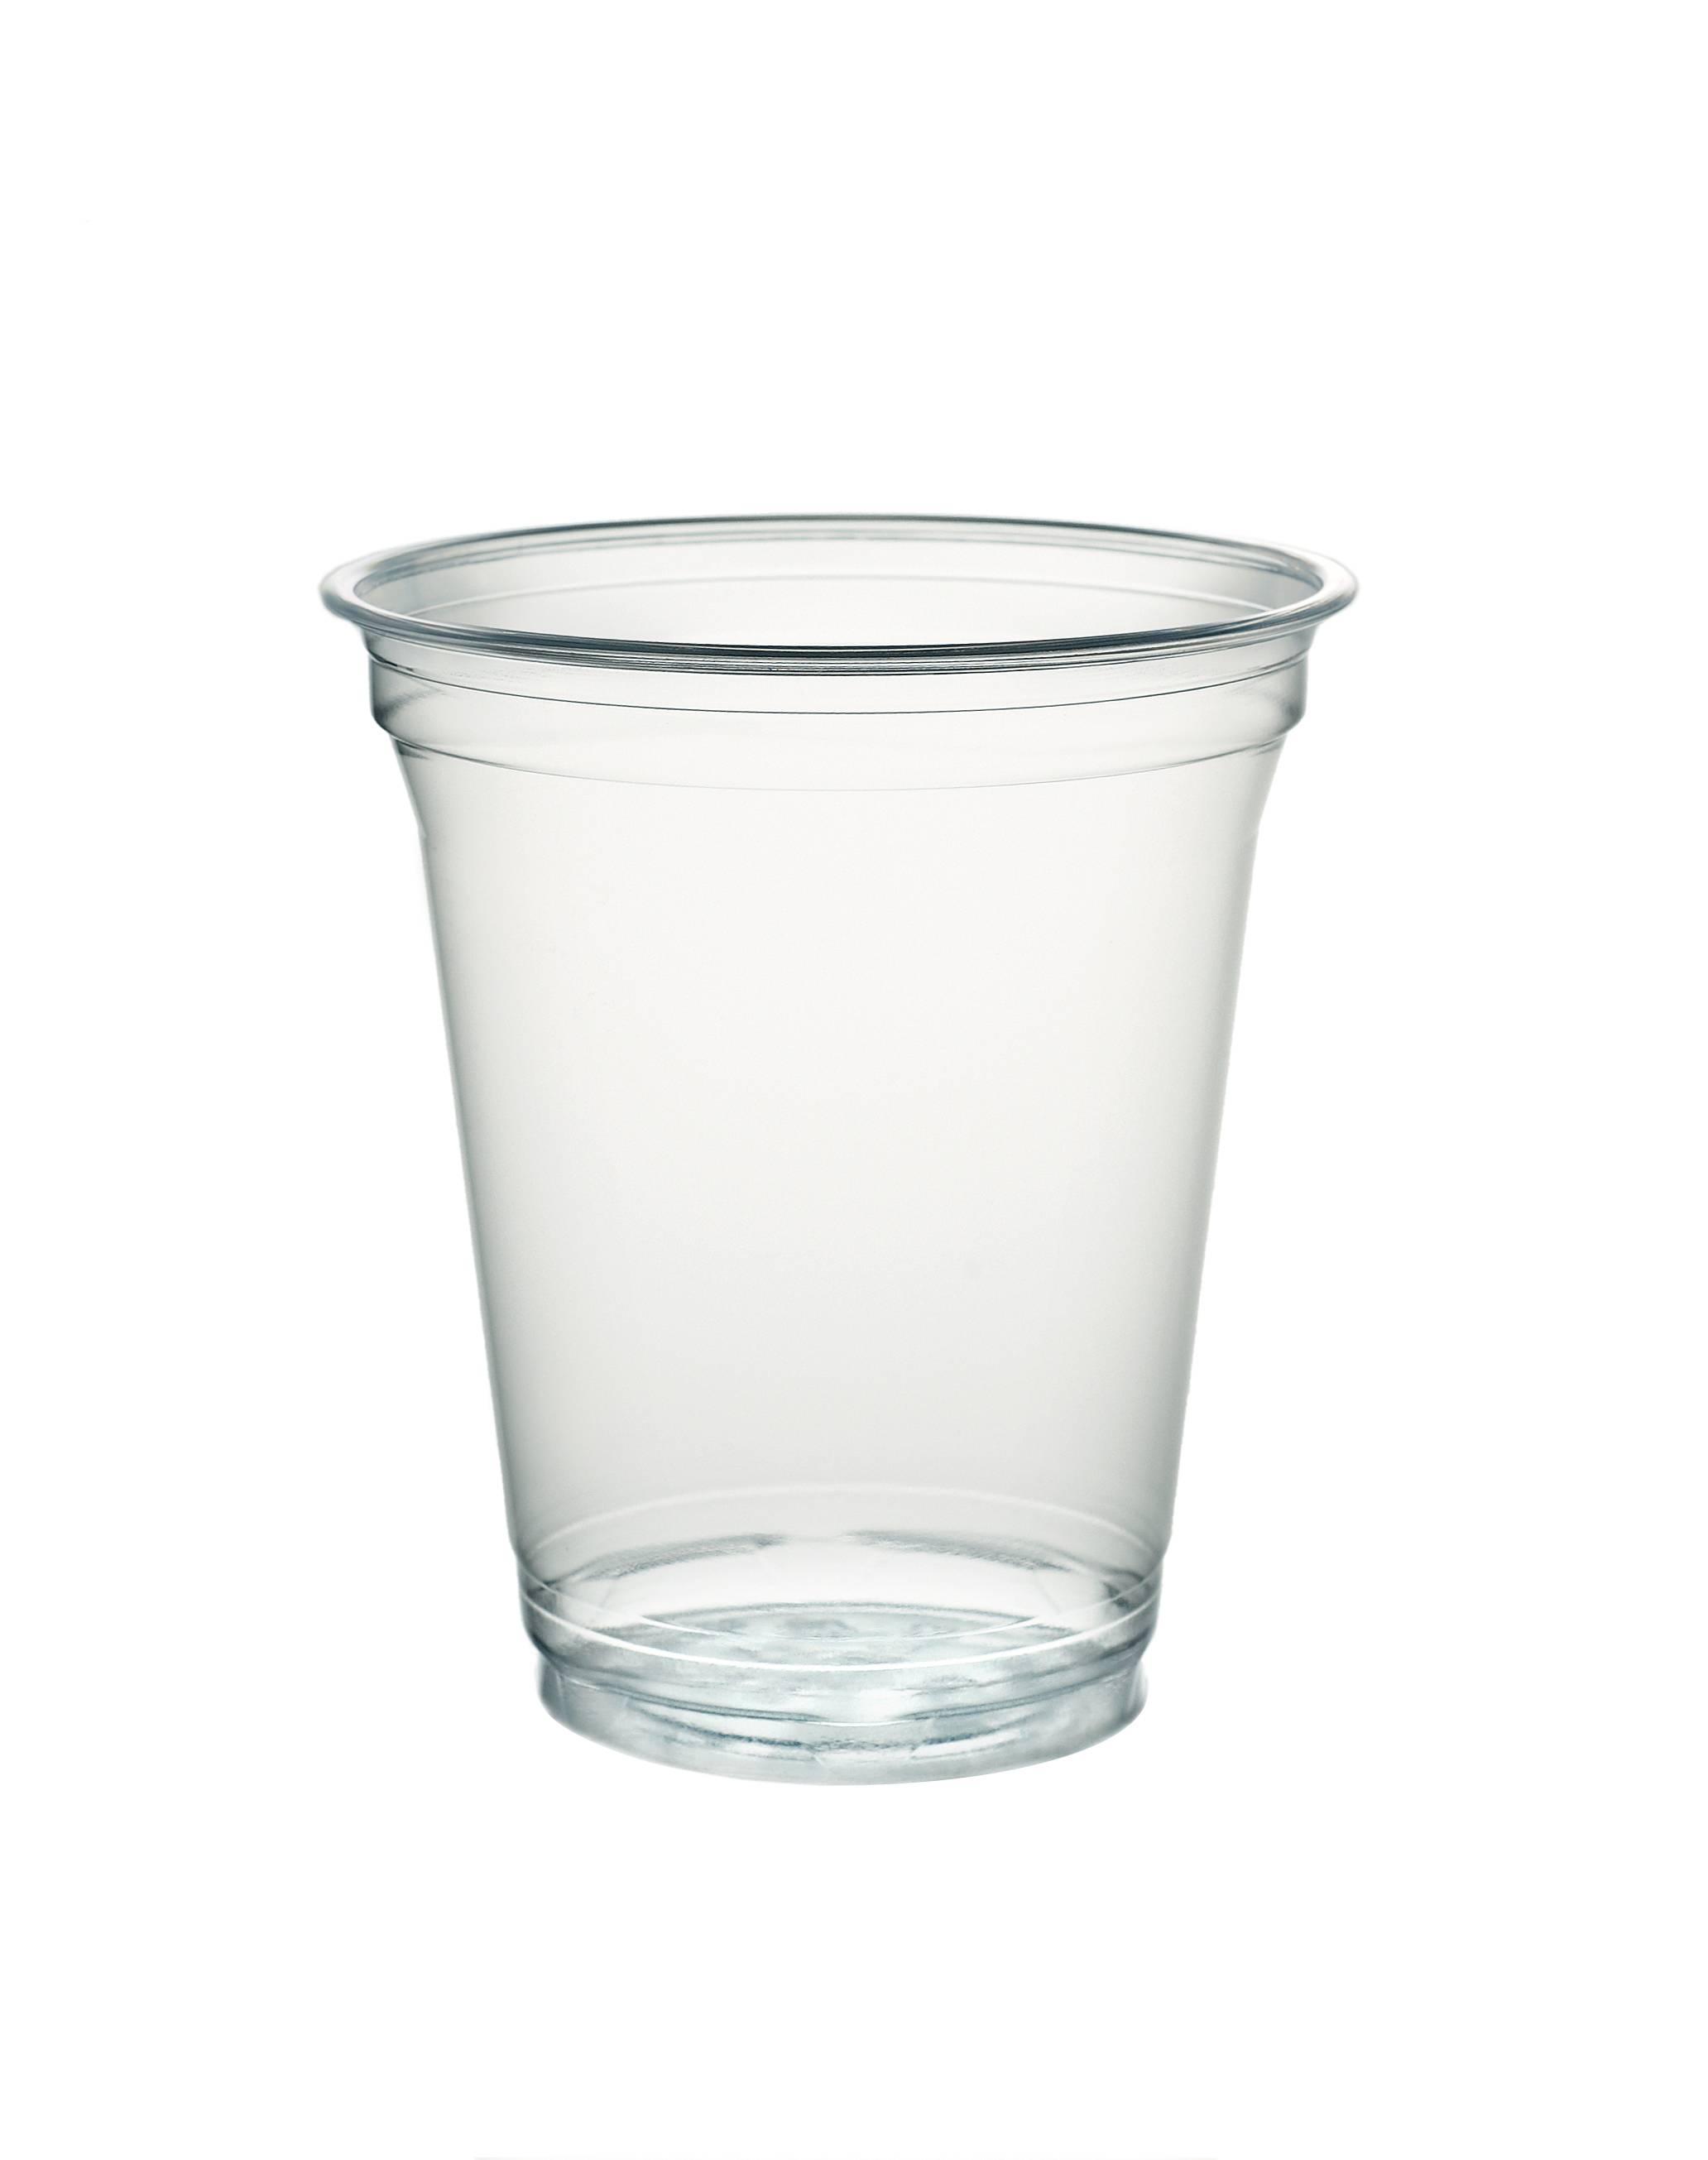 Одноразовый стакан для холодного, 0.3л, d 95мм, h 100мм, прозрачный, шейкер, ПЭТ, 1000 шт